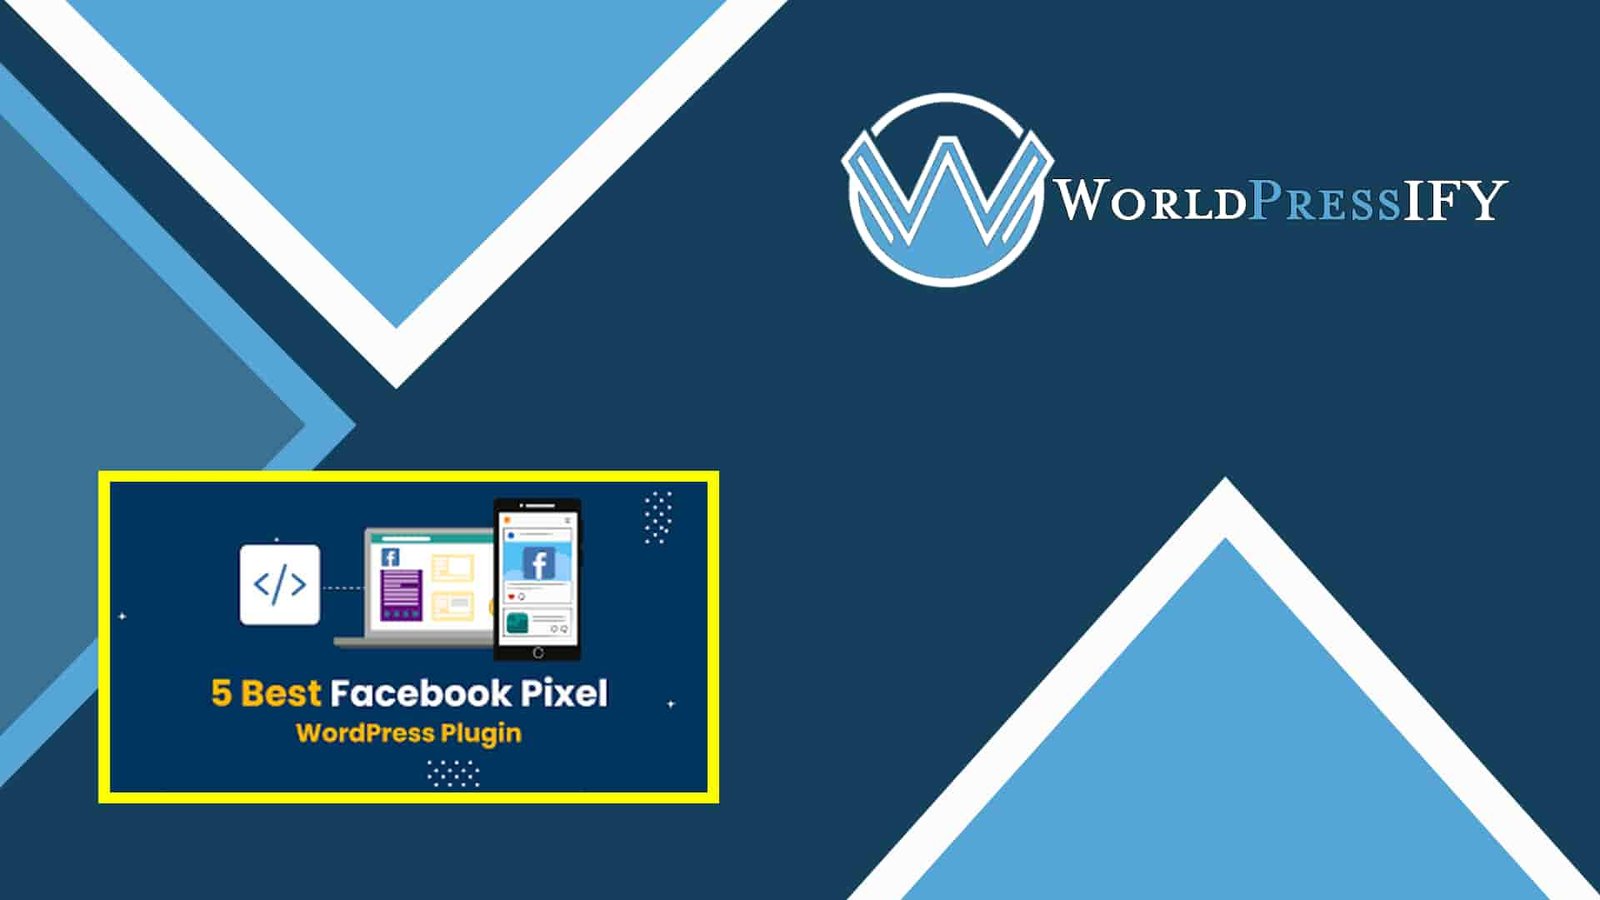 PixelYourSite - WordPress Feed for Facebook Dynamic Ads - WorldPress IFY